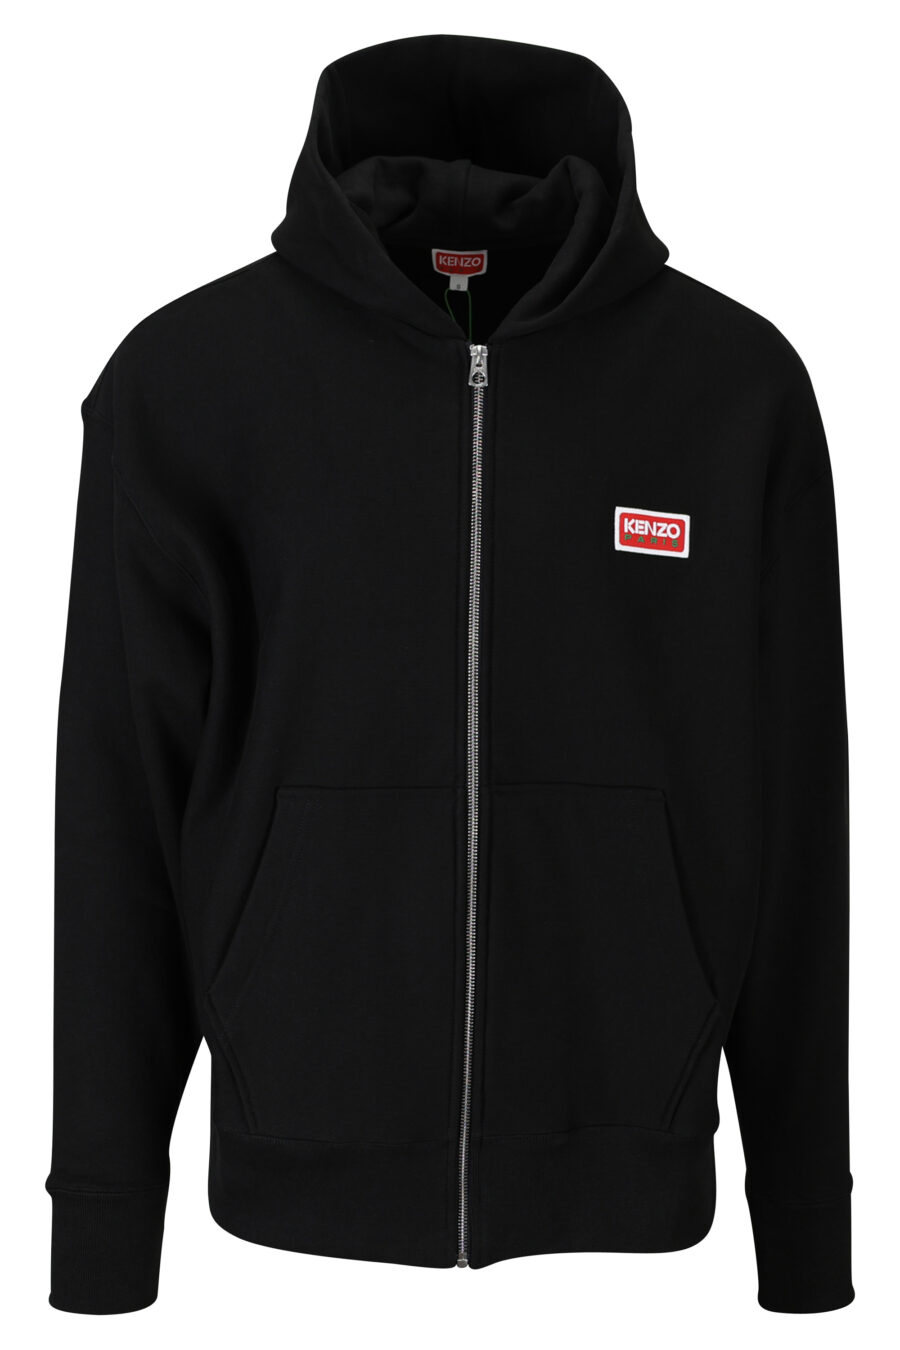 Black oversize sweatshirt with hood and zip and "kenzo paris" logo - 3612230539334